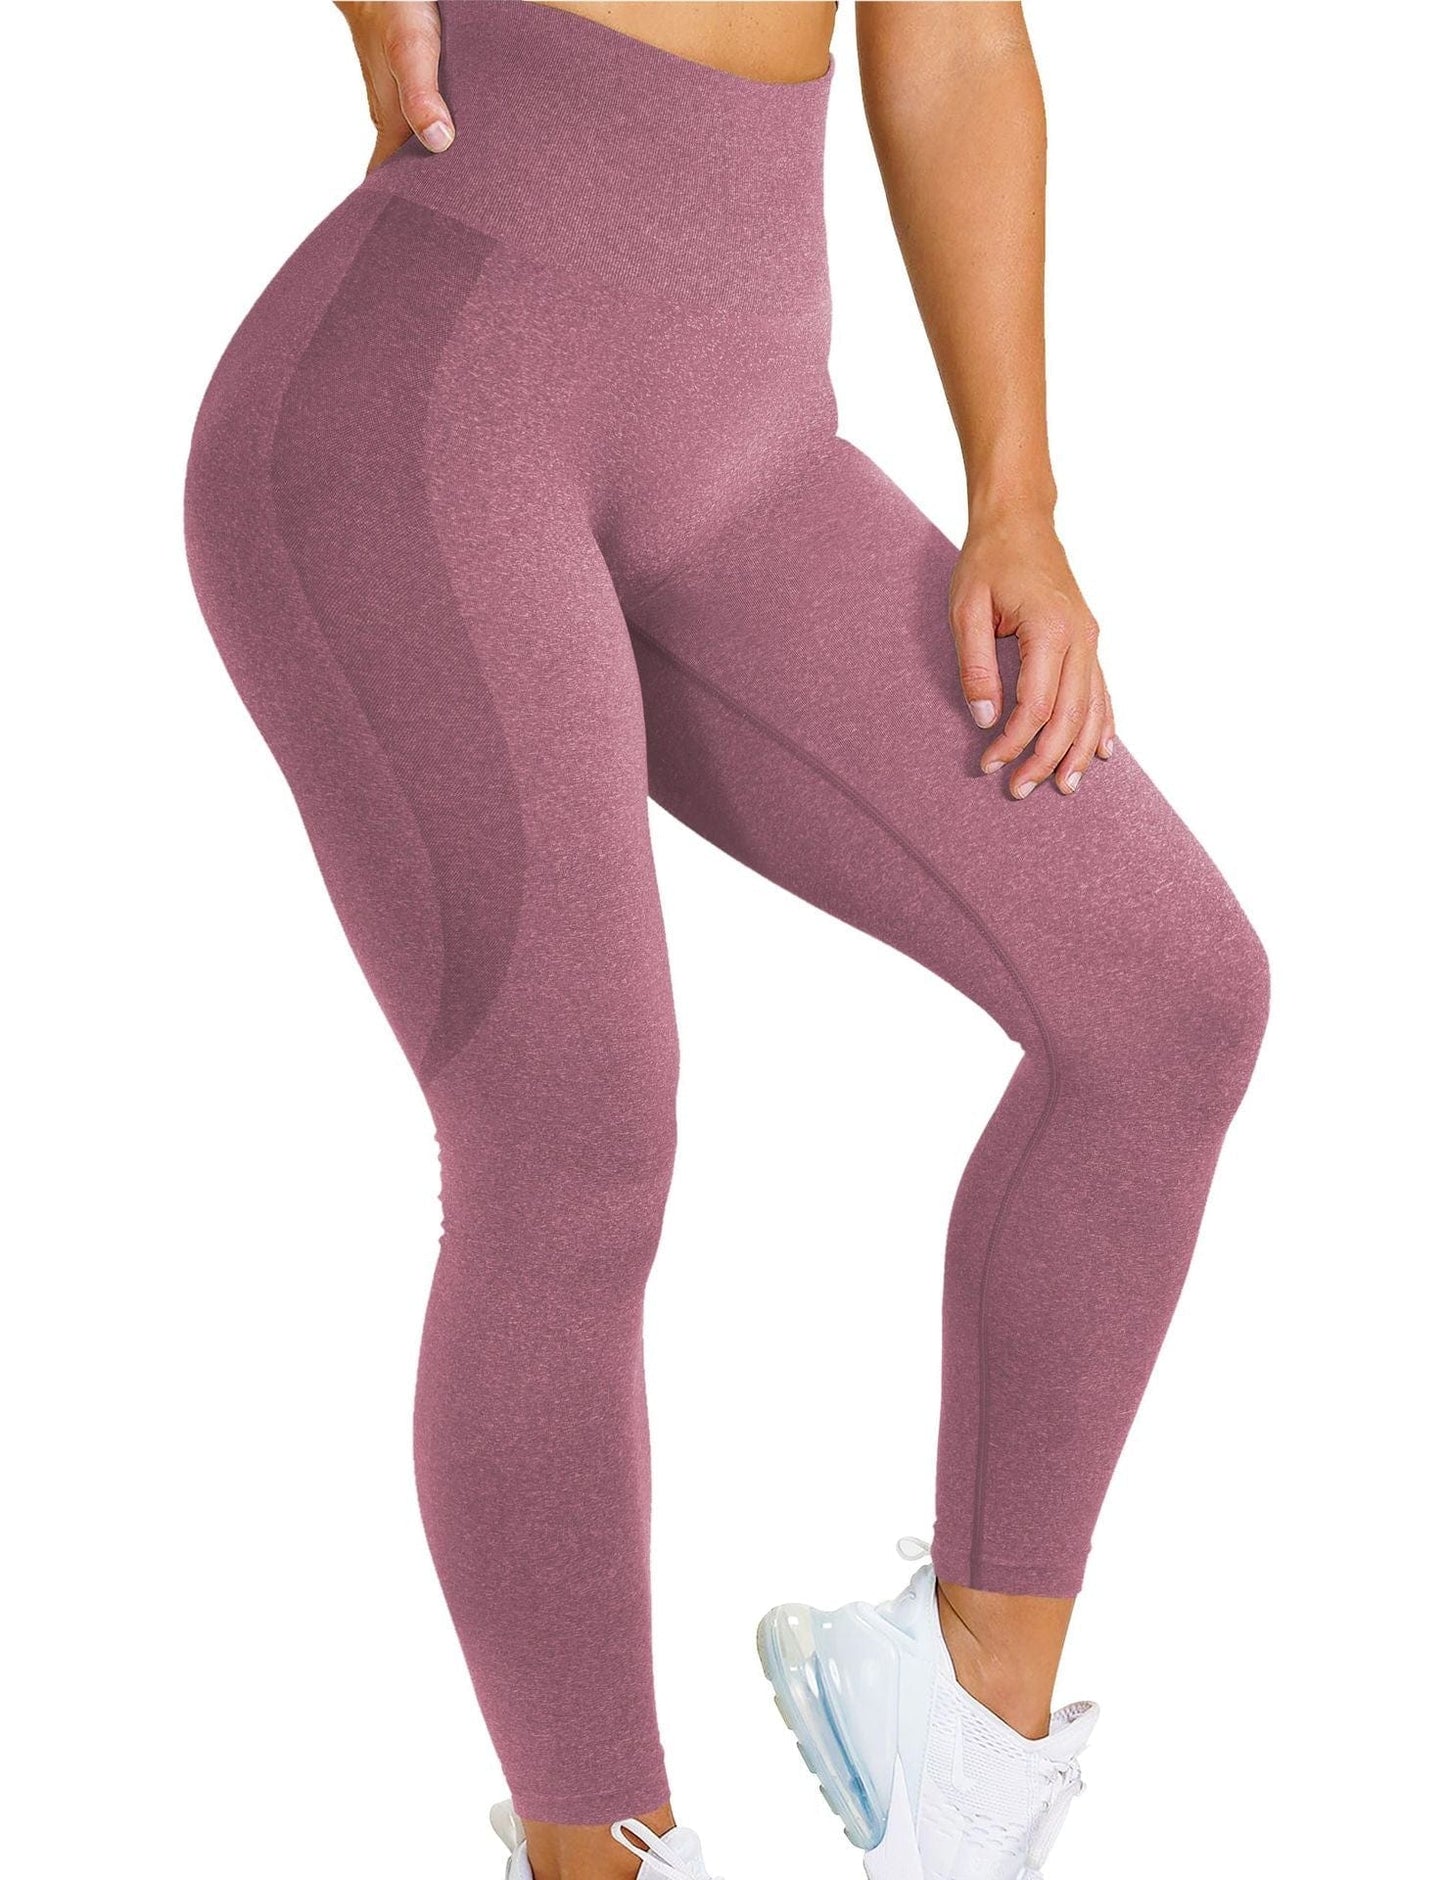 Women Hot Style Snowflake Smiley Pants Jacquard Seamless Yoga Pants Fitness Cropped Pants Yoga leggings dsers pink / XS